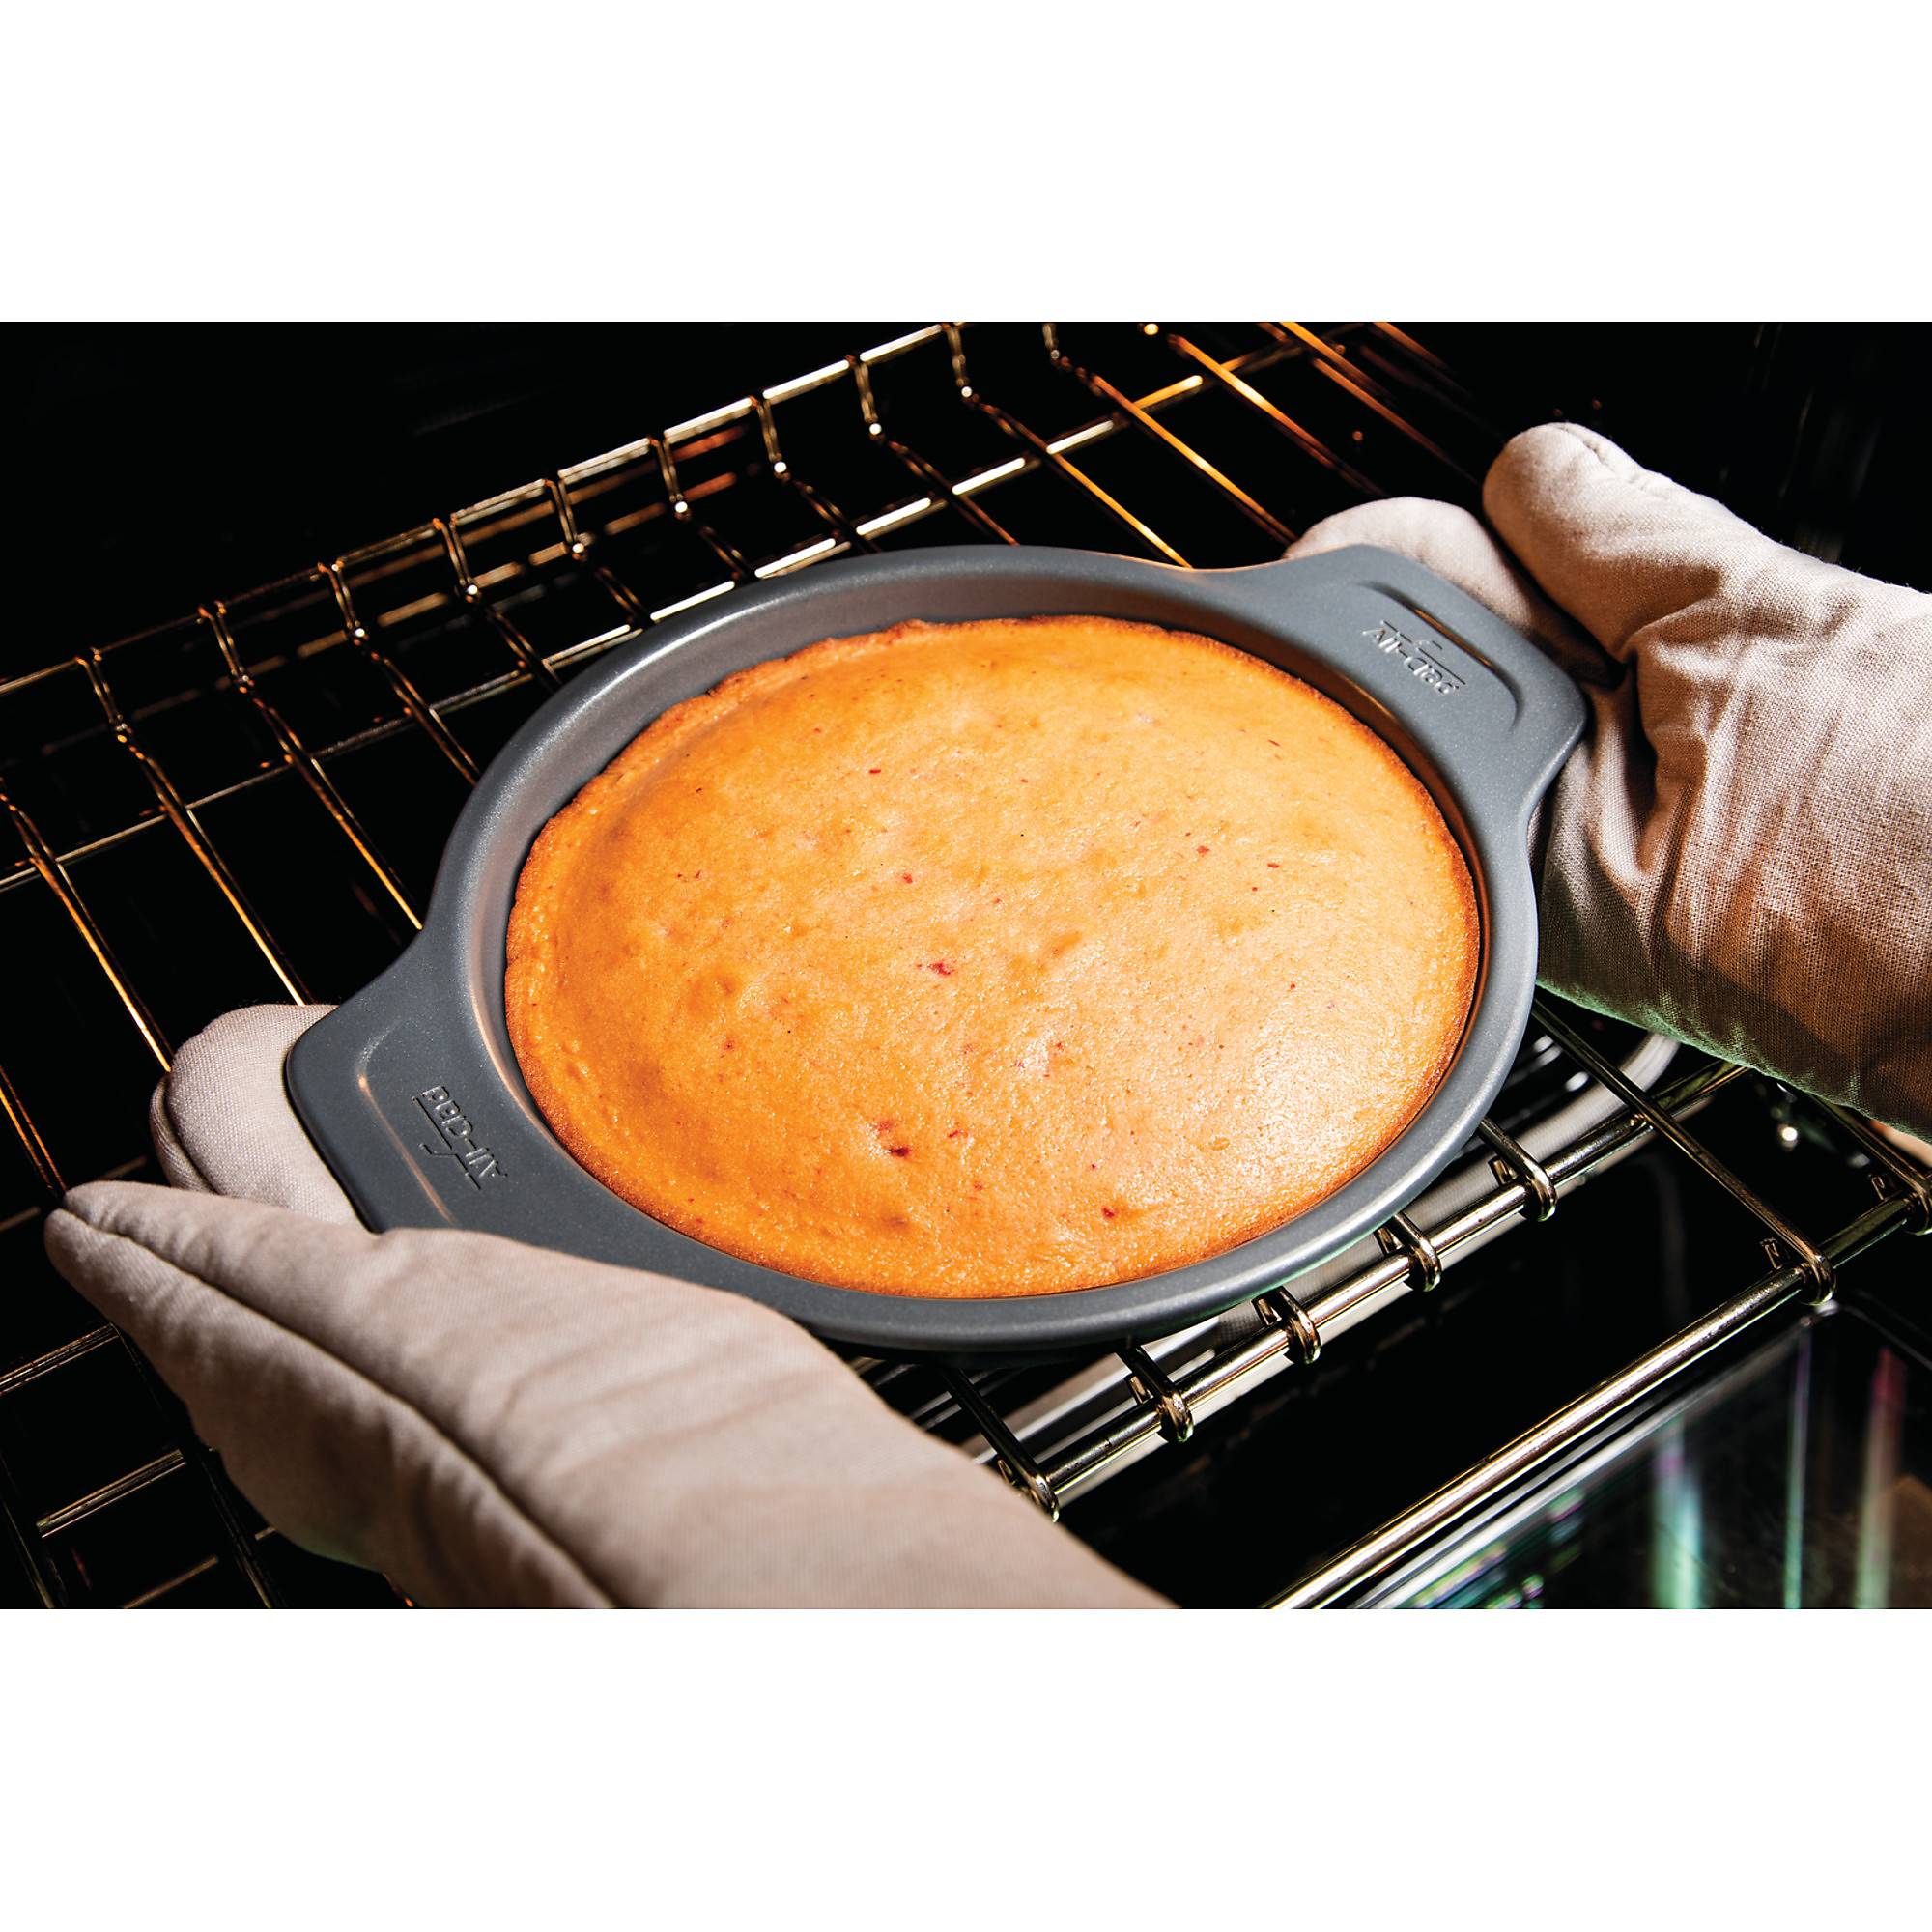 EASY RELEASE NONSTICK BAKEWARE OVEN BAKING COOKING SPONGE CAKE PAN DISH TIN TRAY 